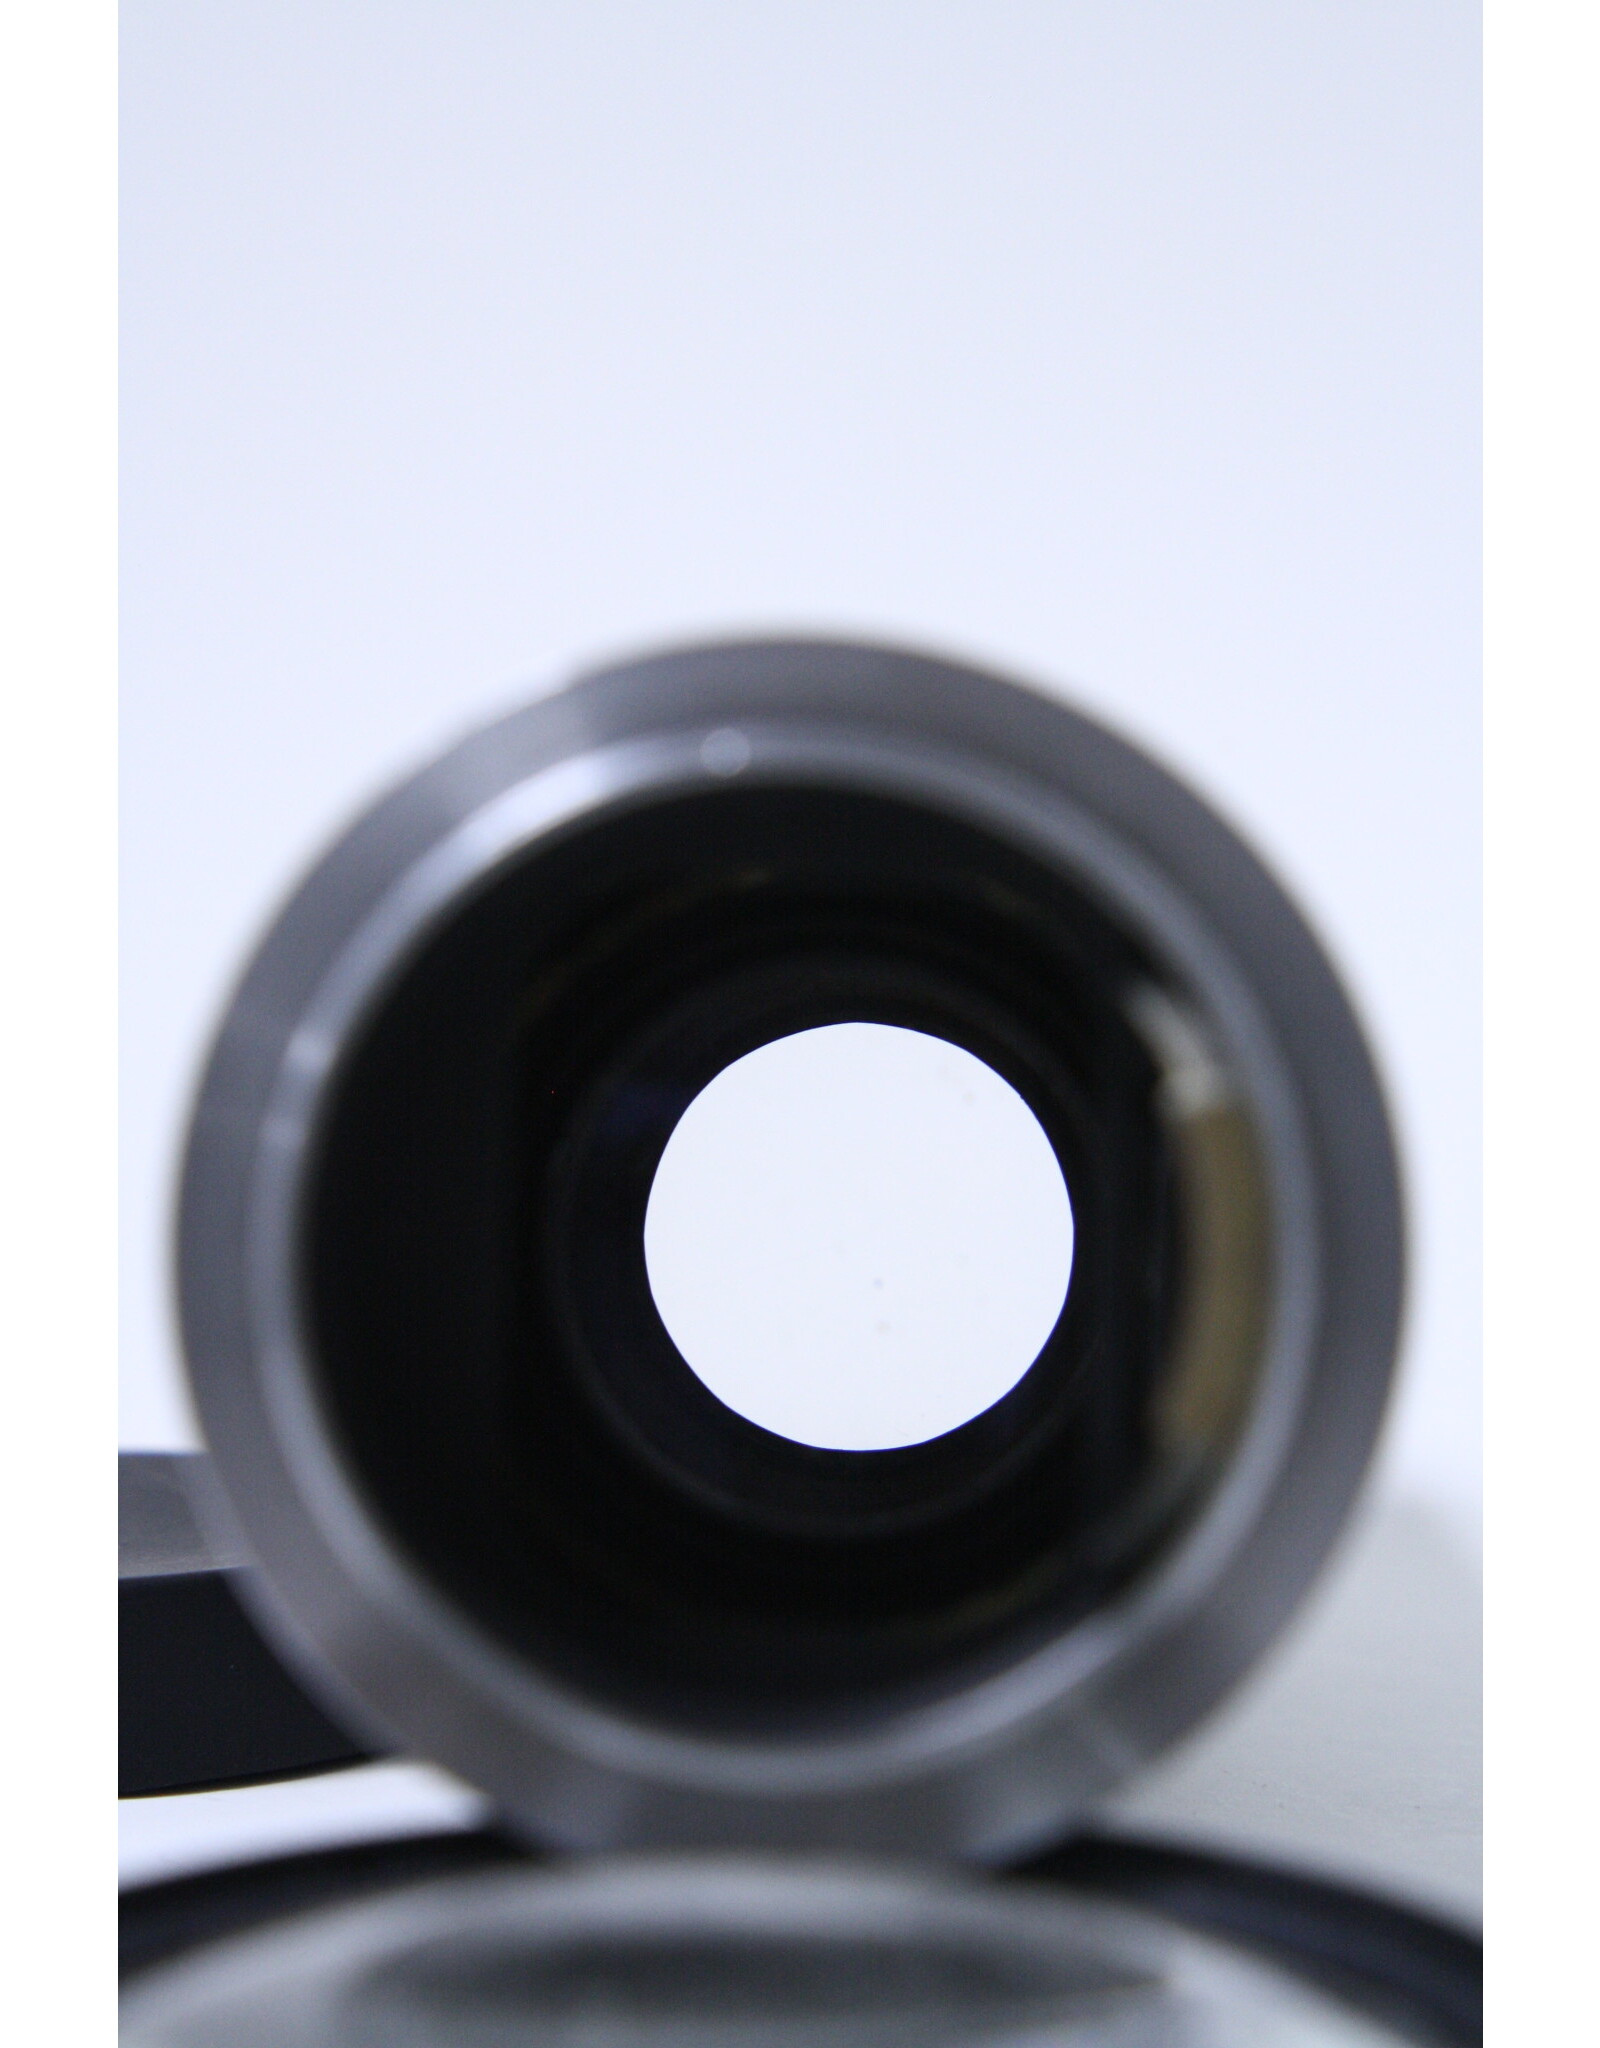 Canon Canon Rangefinder SERENAR 135mm f/4 lens Leica screw mount